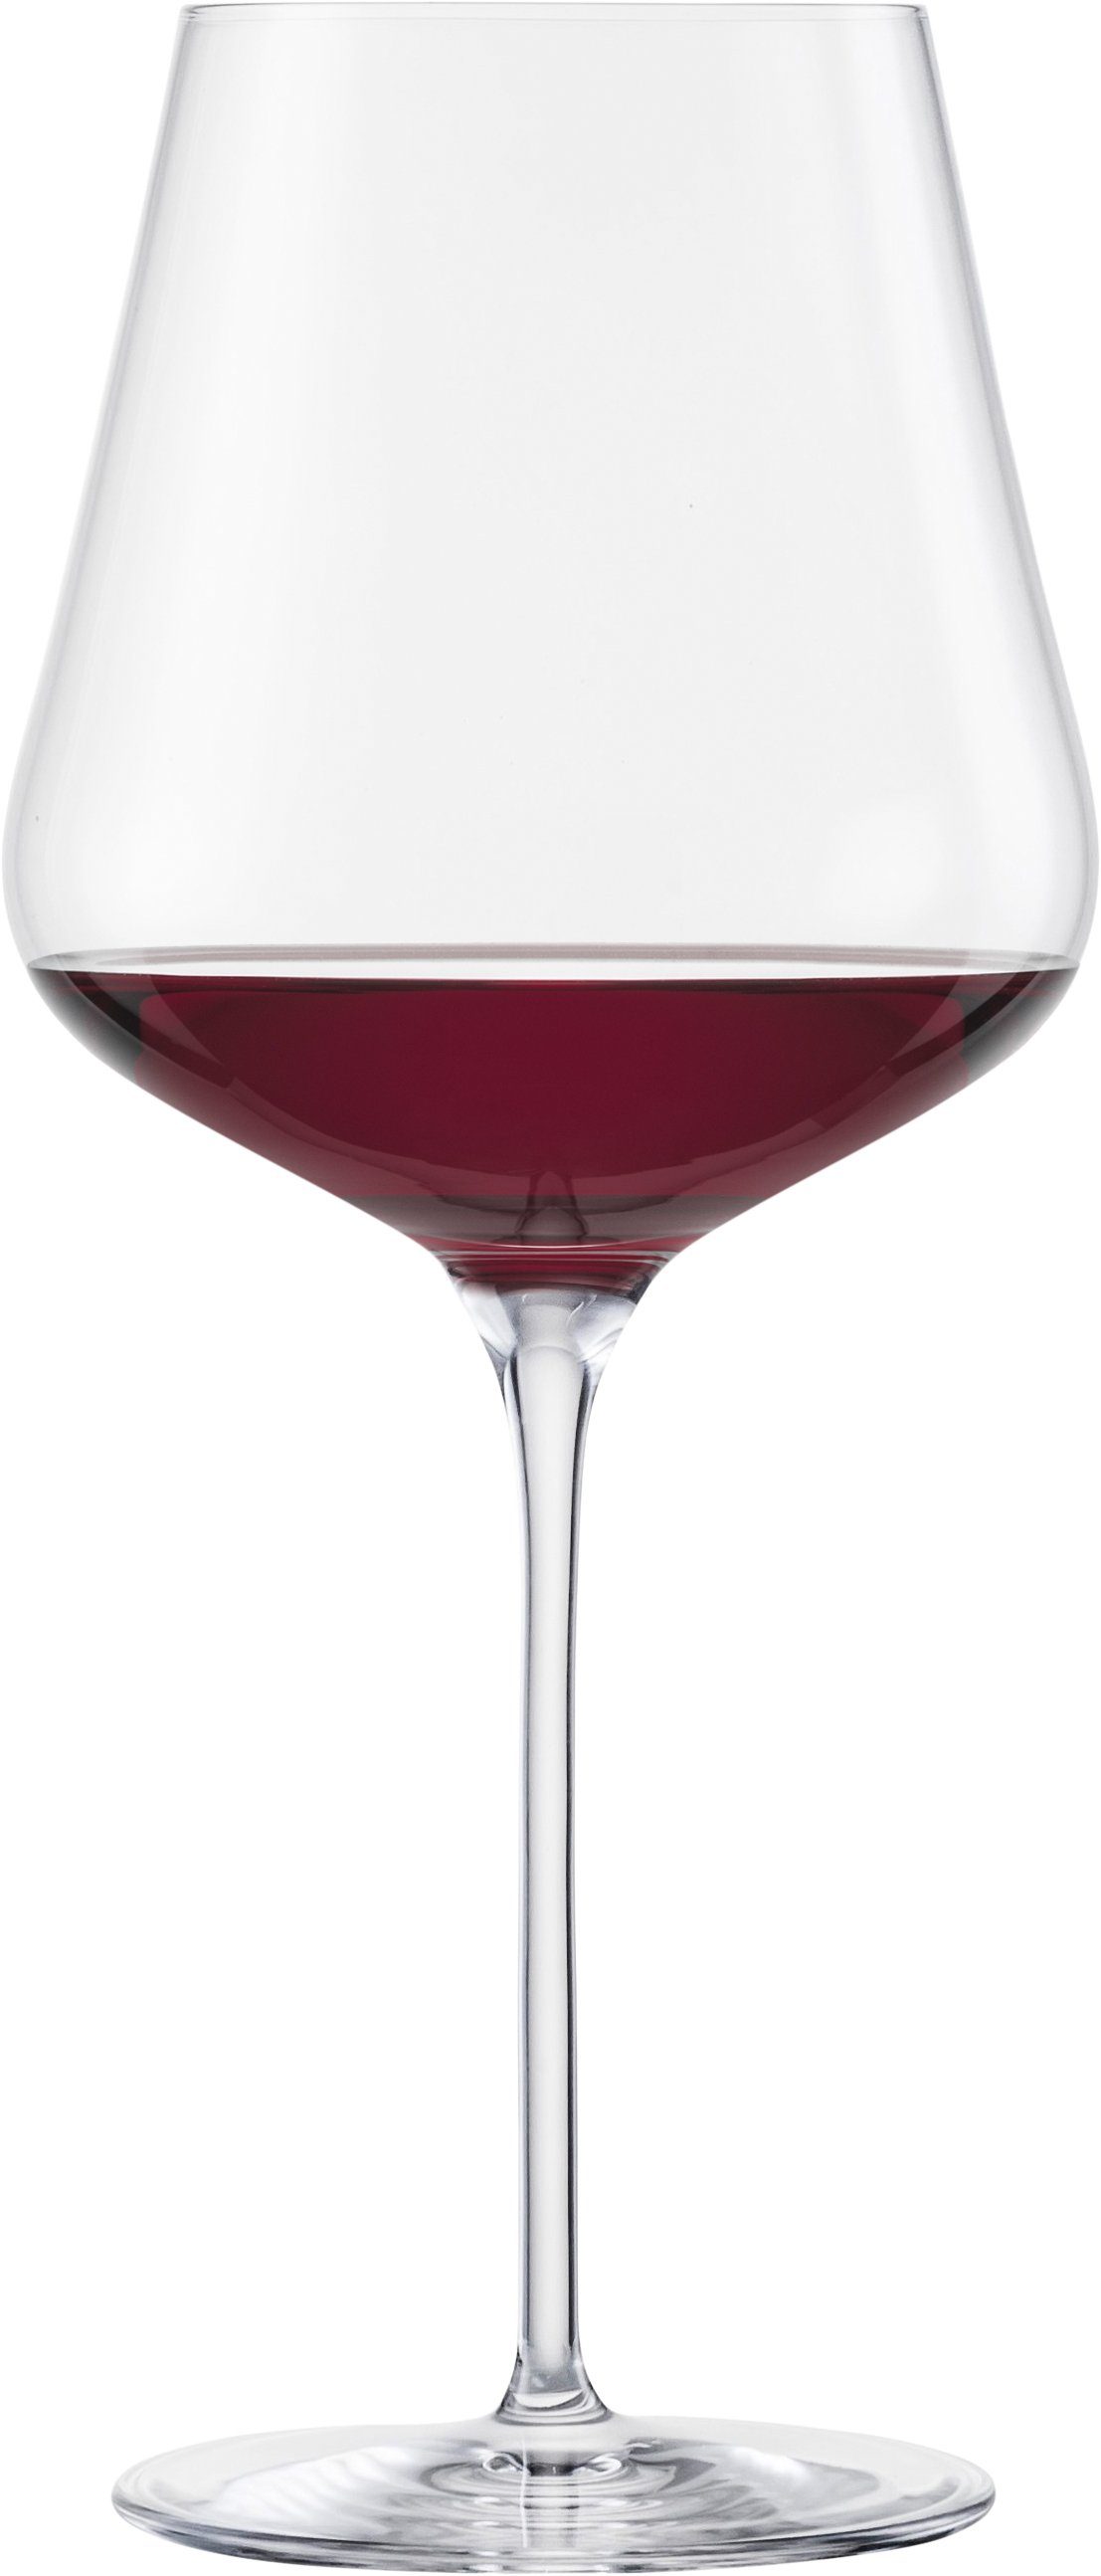 4-teilig bleifrei, Kristallglas, Eisch Rotweinglas (Burgunderglas), ml, SkySensisPlus, 710